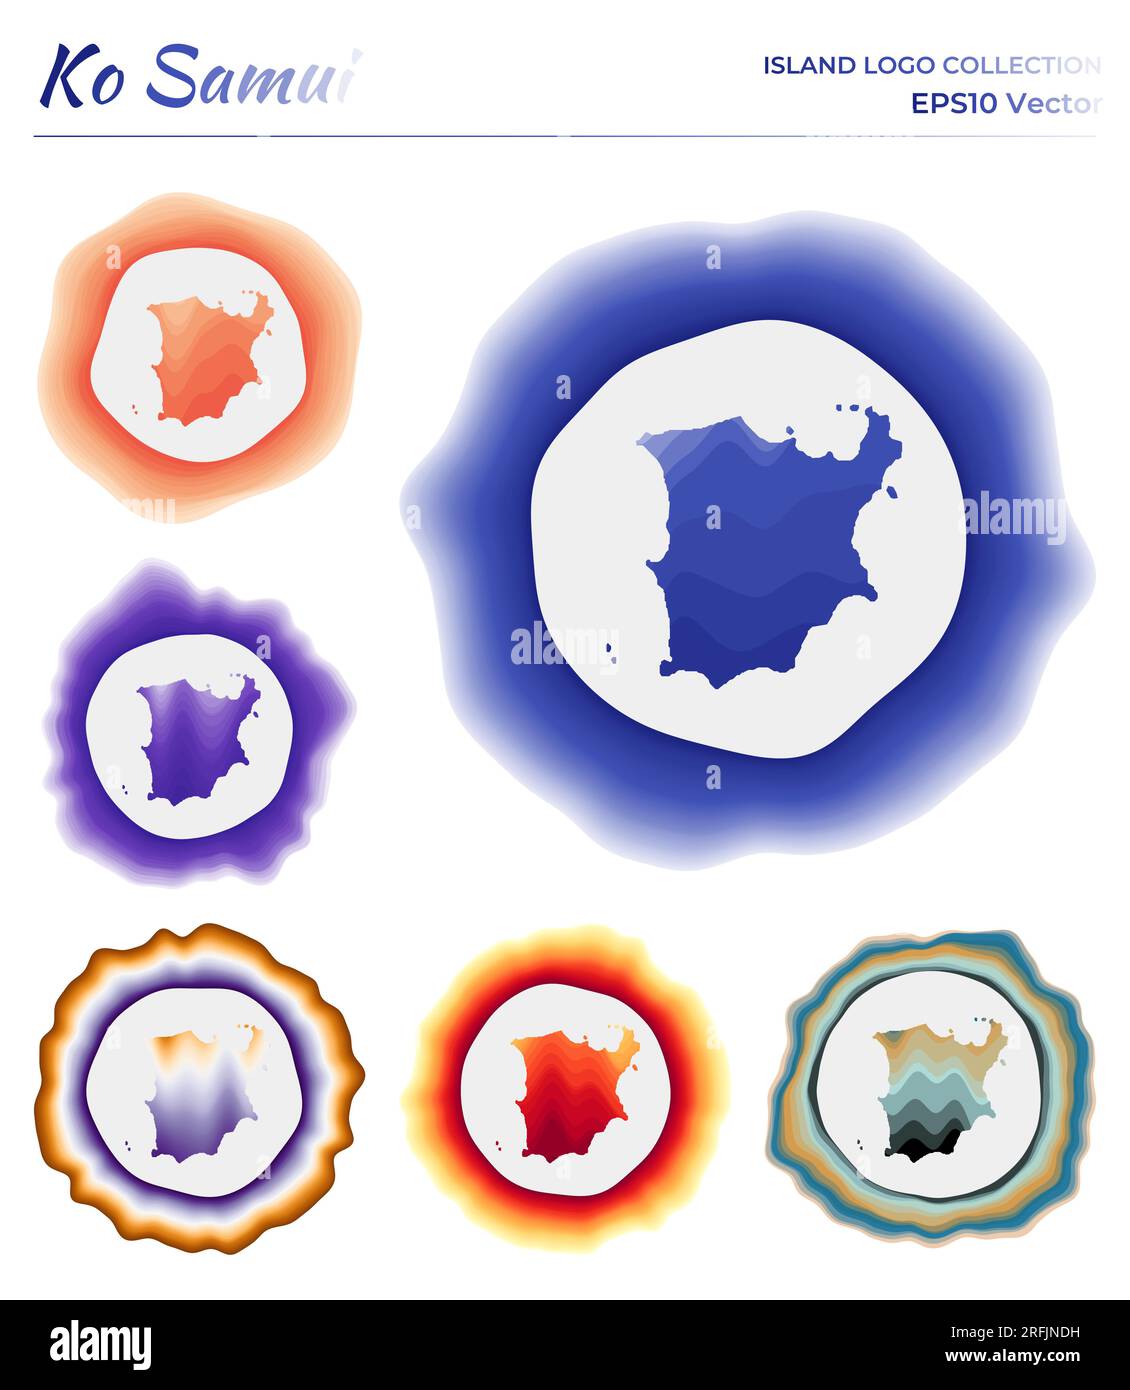 Ko Samui logo collection. Colorful badge of the island. Layers around Ko Samui border shape. Vector illustration. Stock Vector